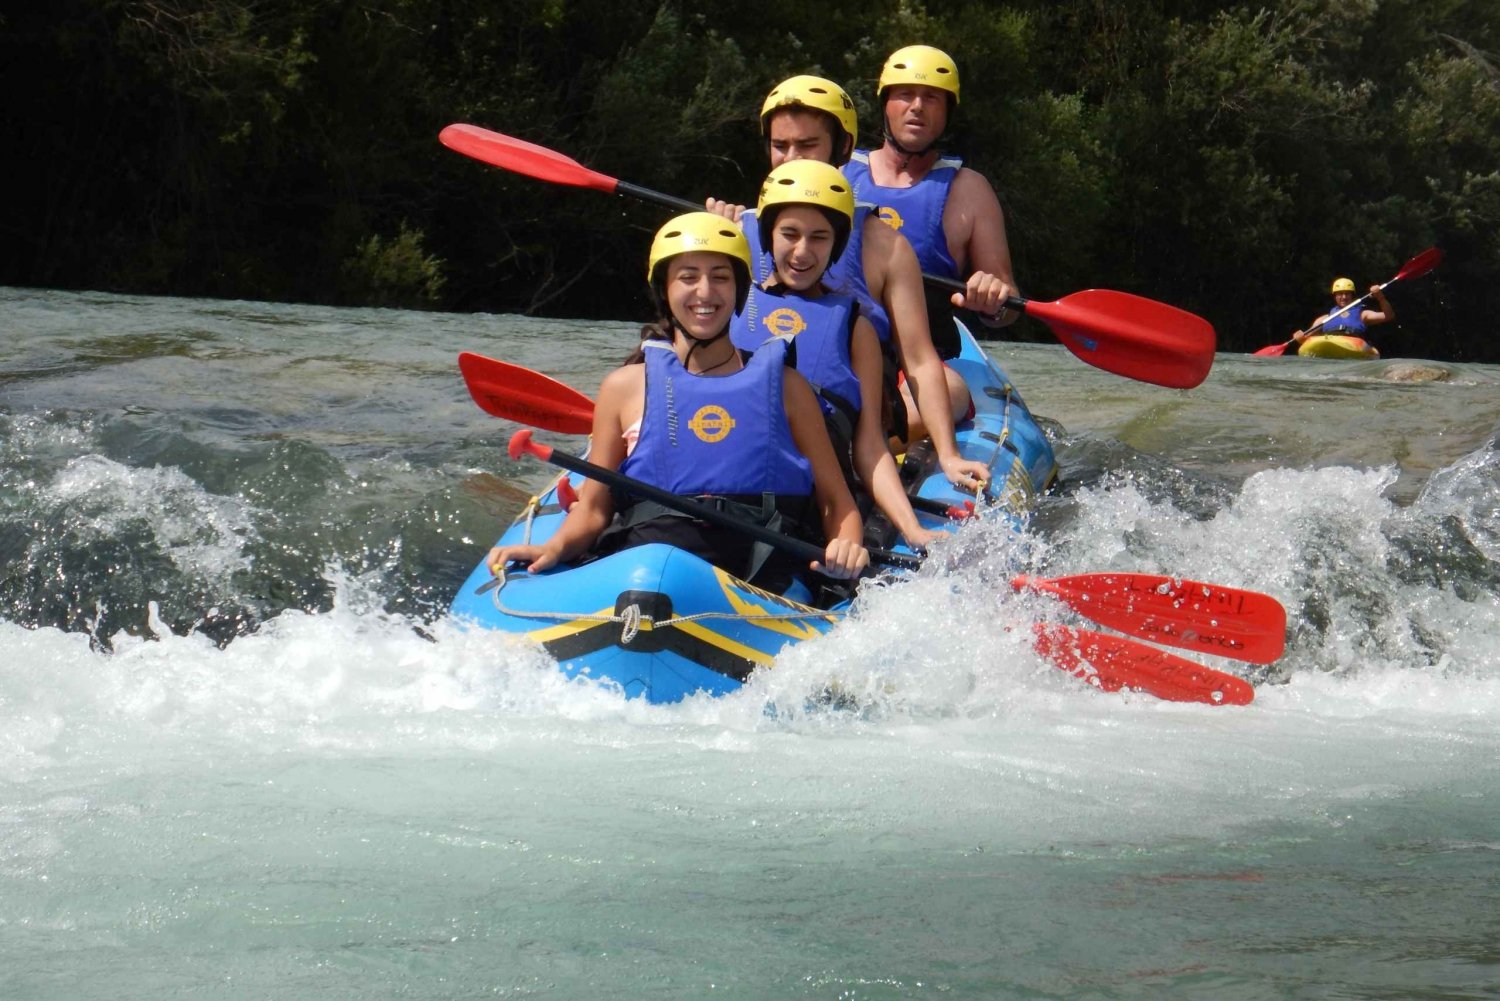 Radovljica: Rafting Tour sul fiume Sava con Mini Raft